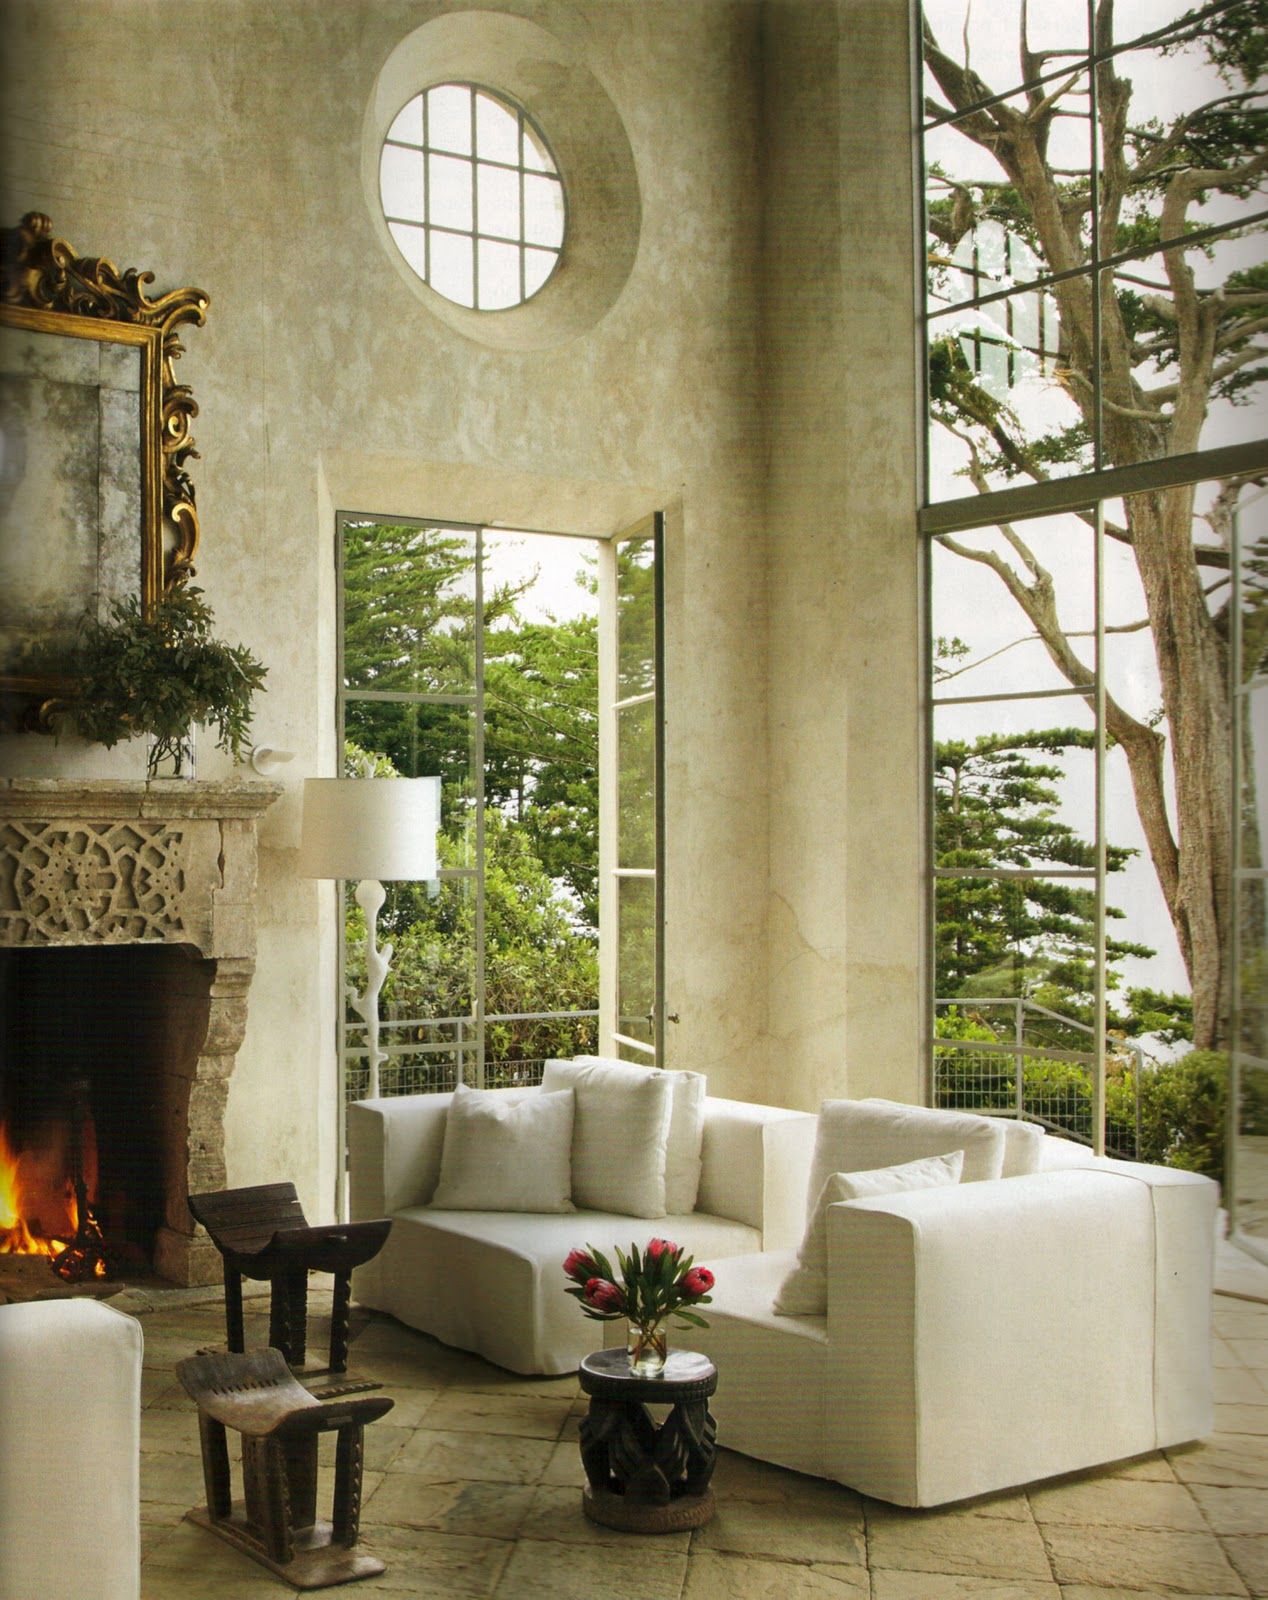 Schrader Fireplace Awesome Splendid Sass Richard Shapiro Design In Malibu